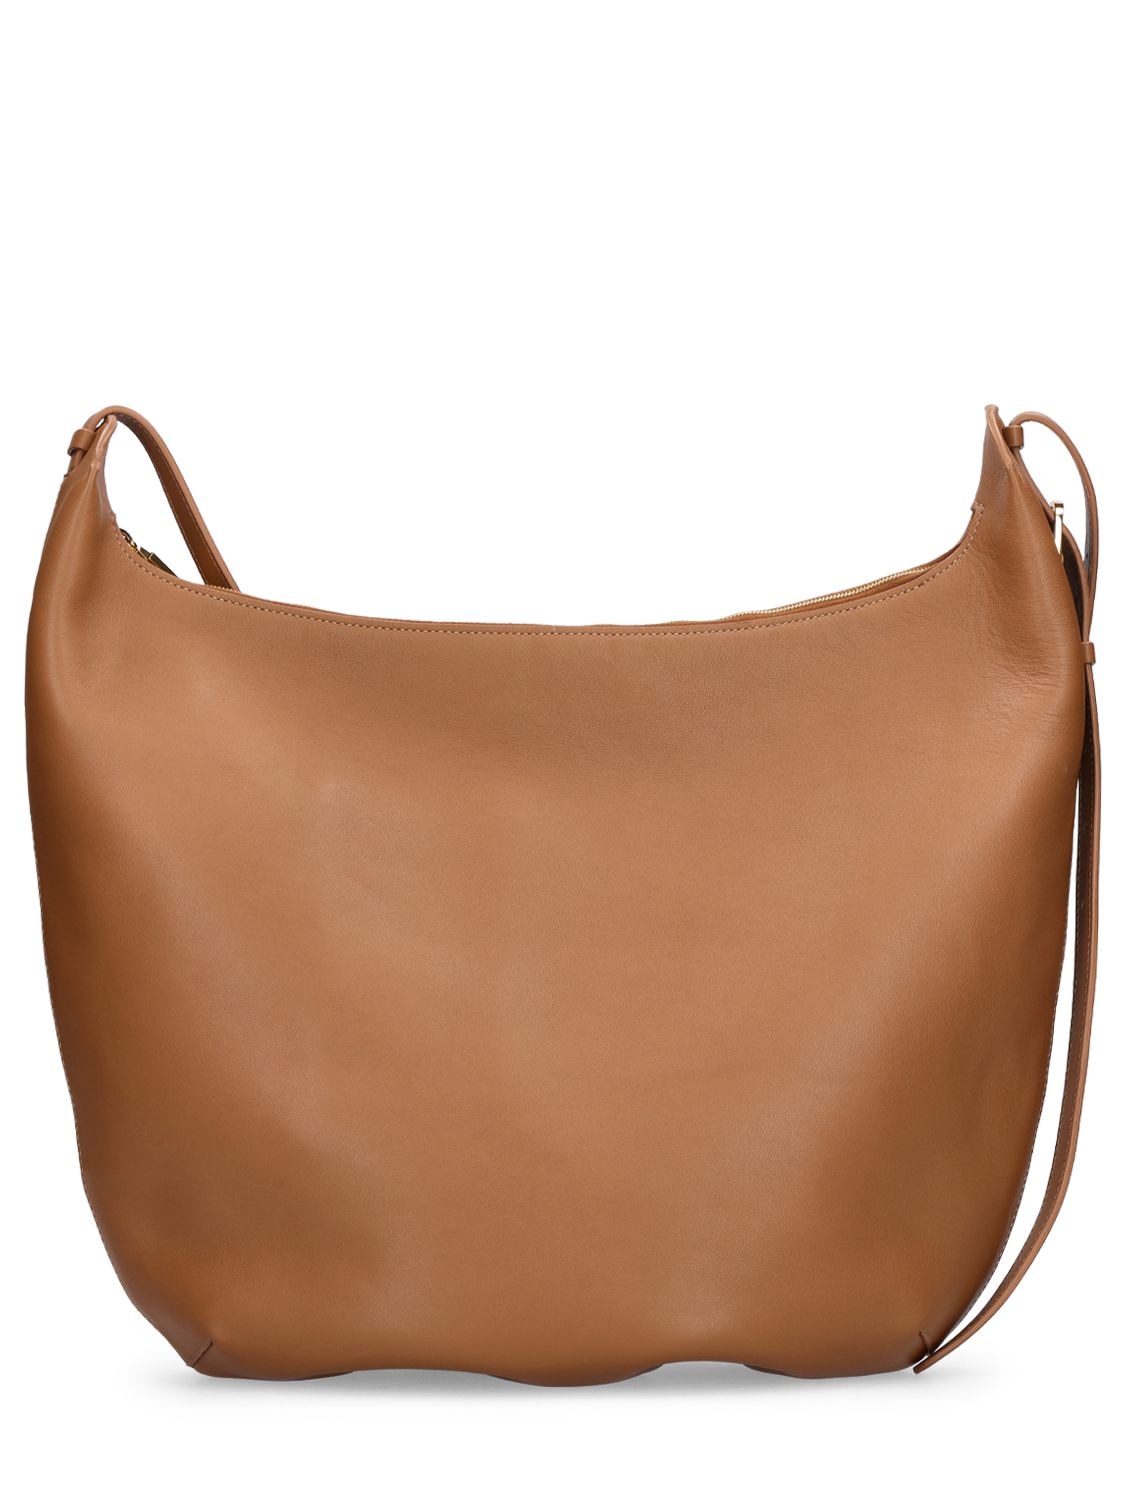 The Row Allie Leather Shoulder Bag In Camel